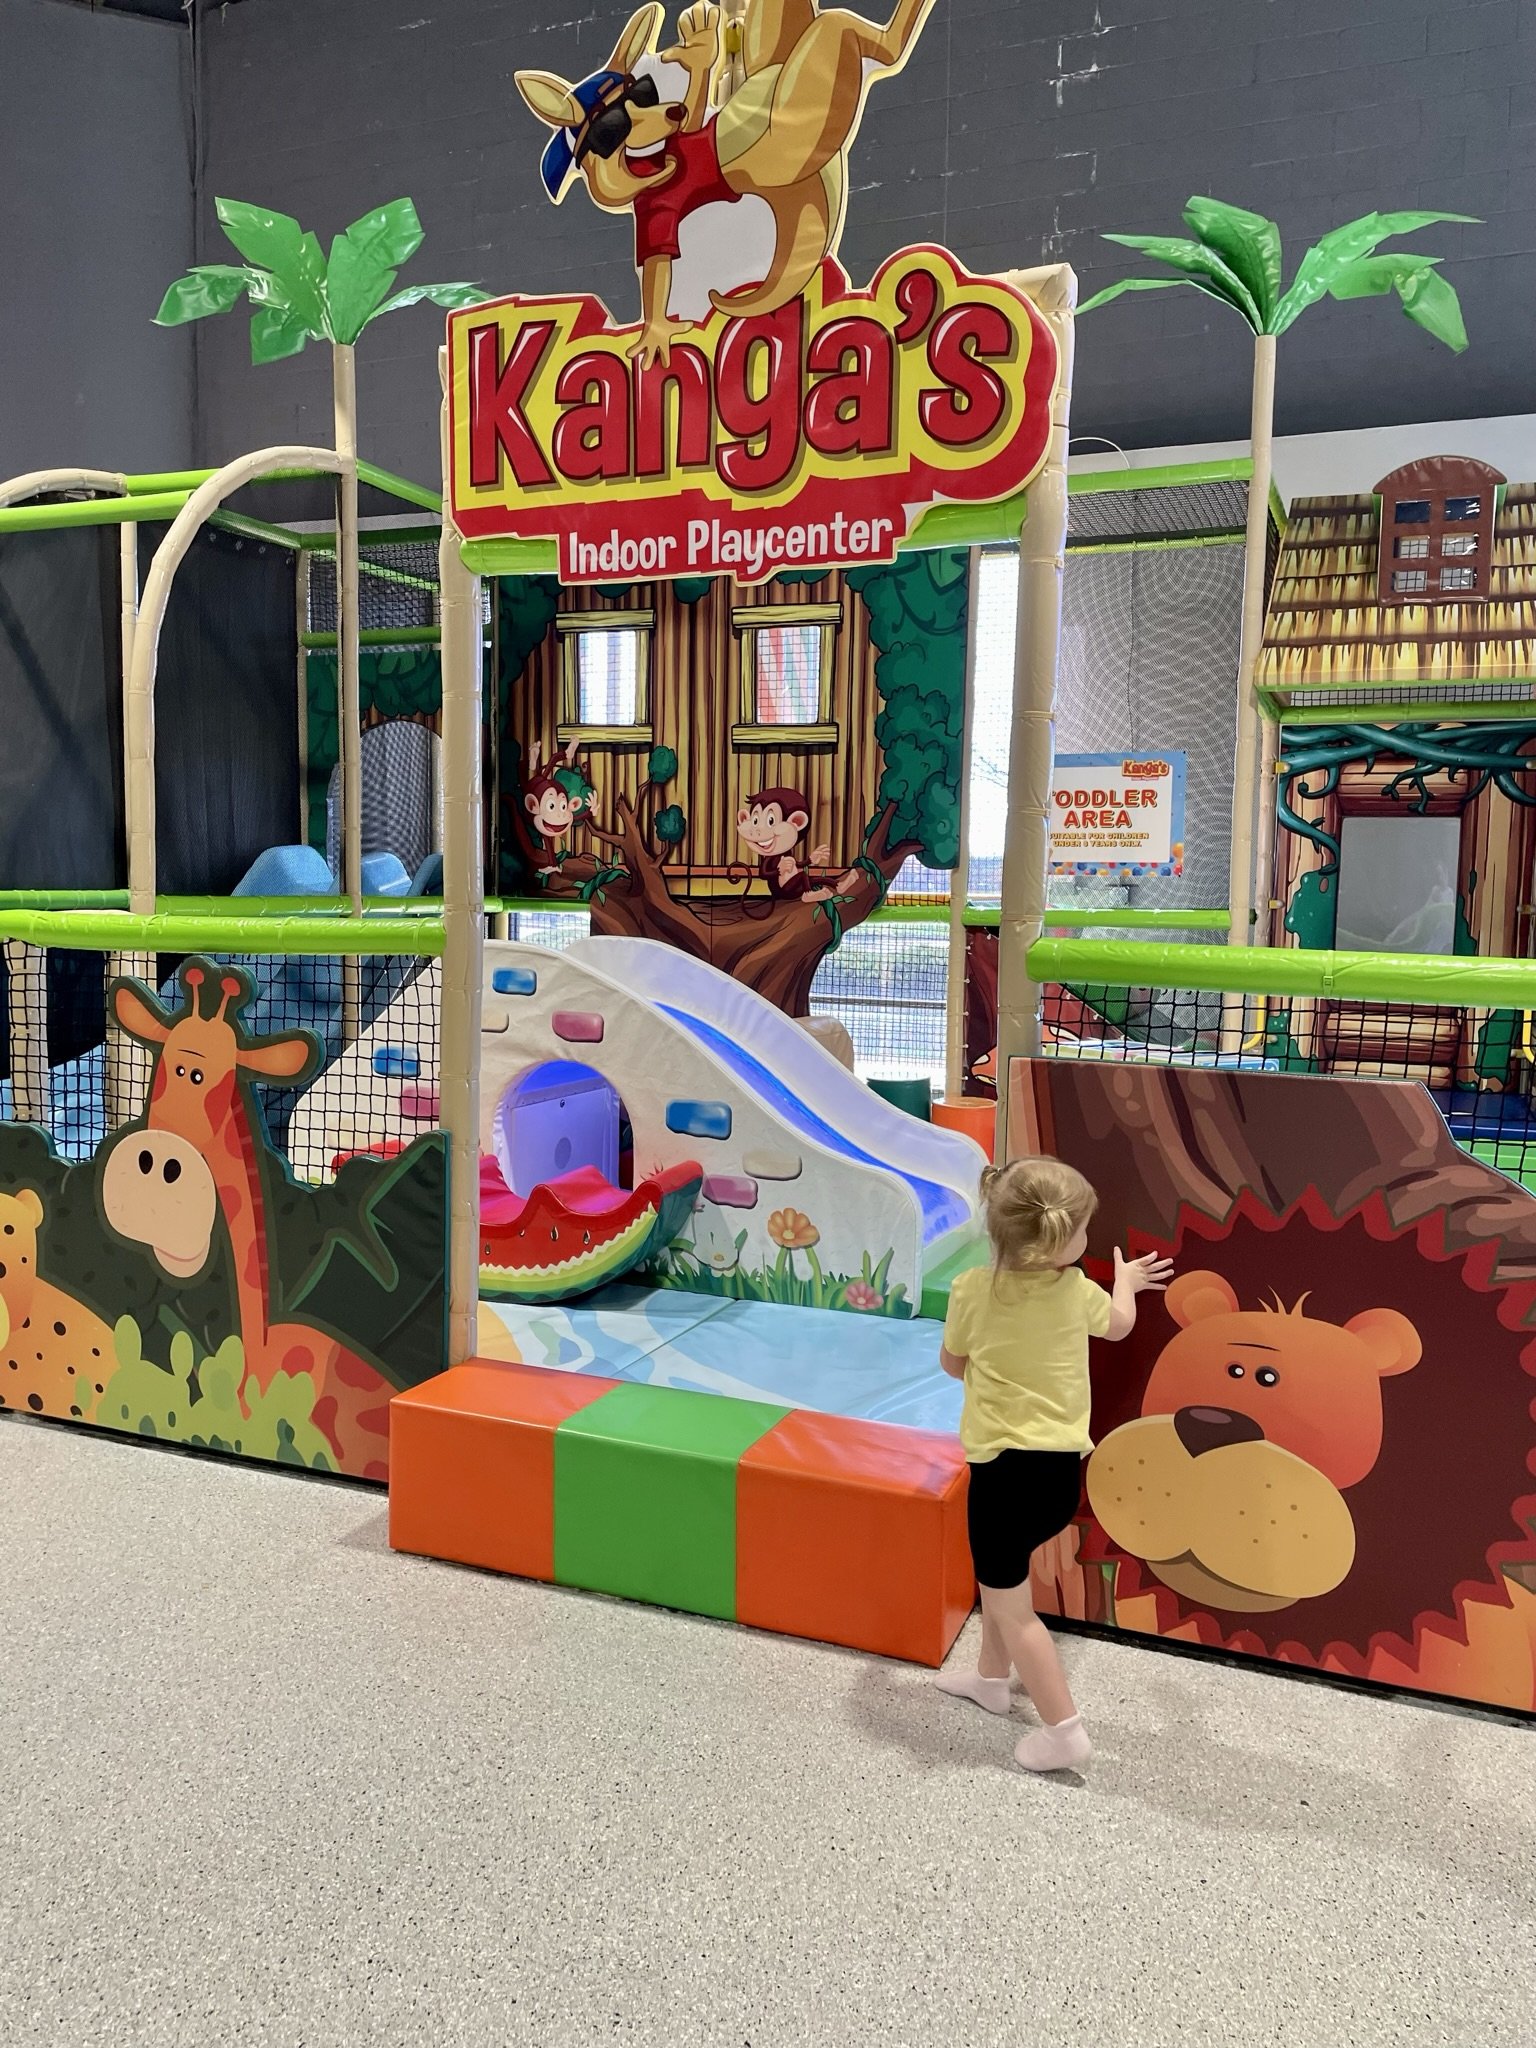 kangas indoor playcenter independence_kidsinkc_indoor experience gift for kids (3).JPEG